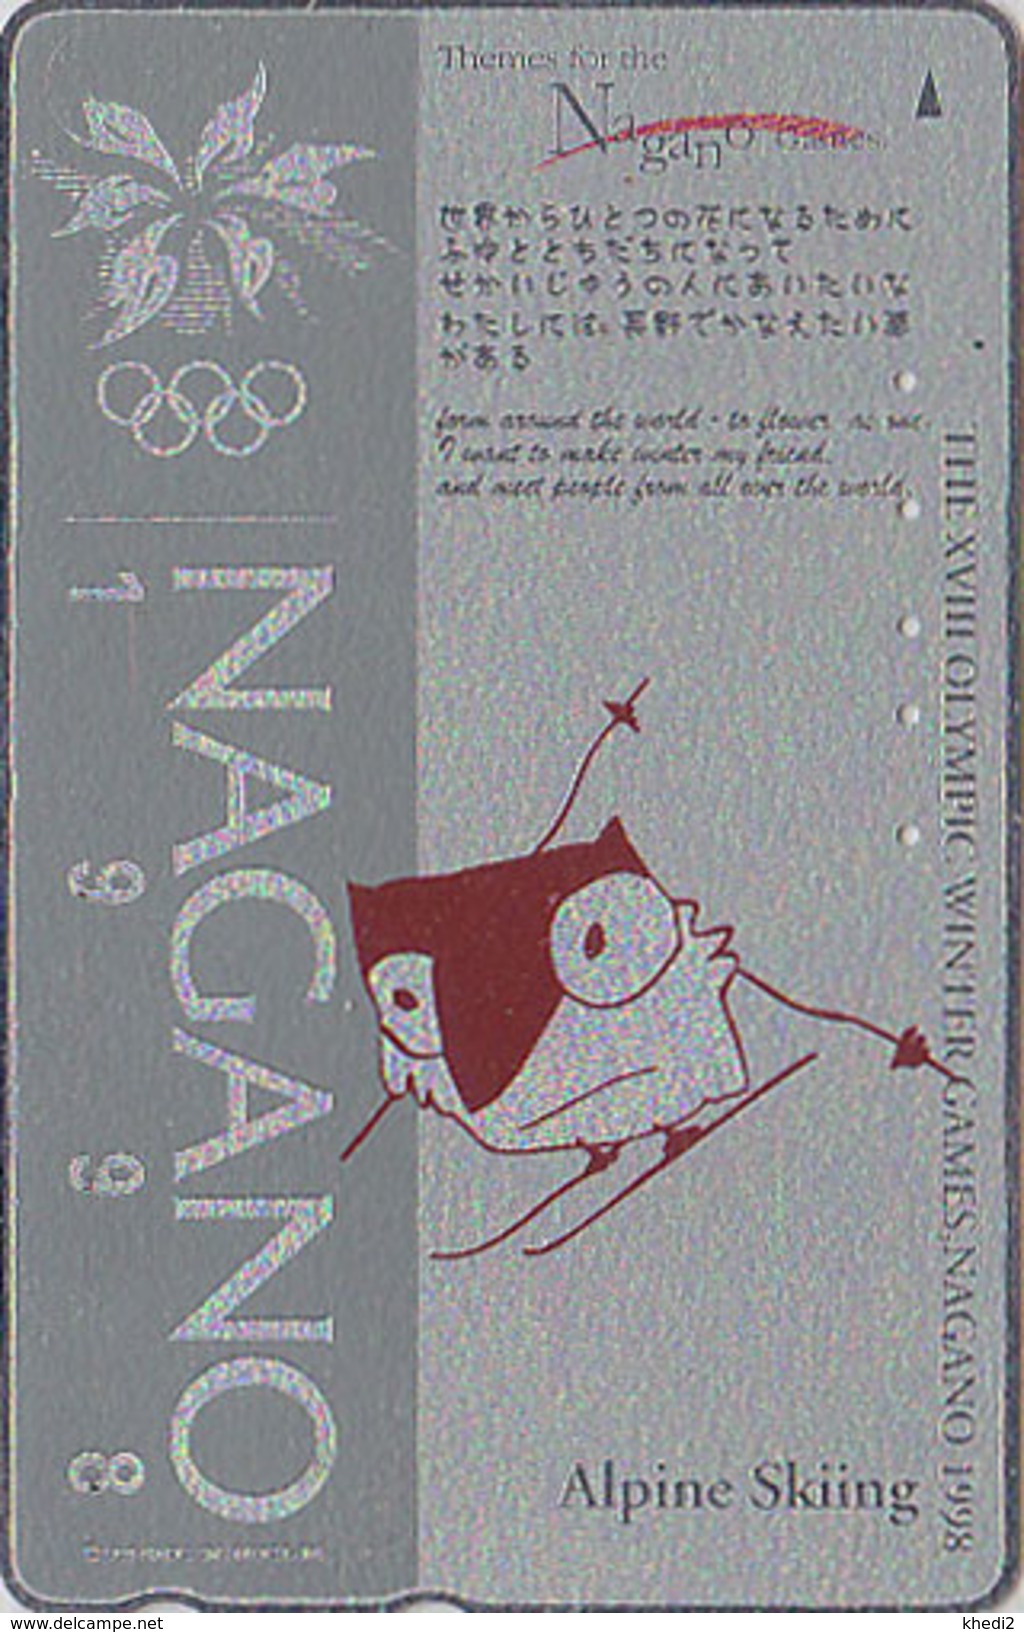 TC ARGENT JAPON / 271-03298 - HIBOU Jeux Olympiques NAGANO SKI ALPIN - OWL OLYMPIC GAMES JAPAN SILVER Free Pc - 3940 - Juegos Olímpicos